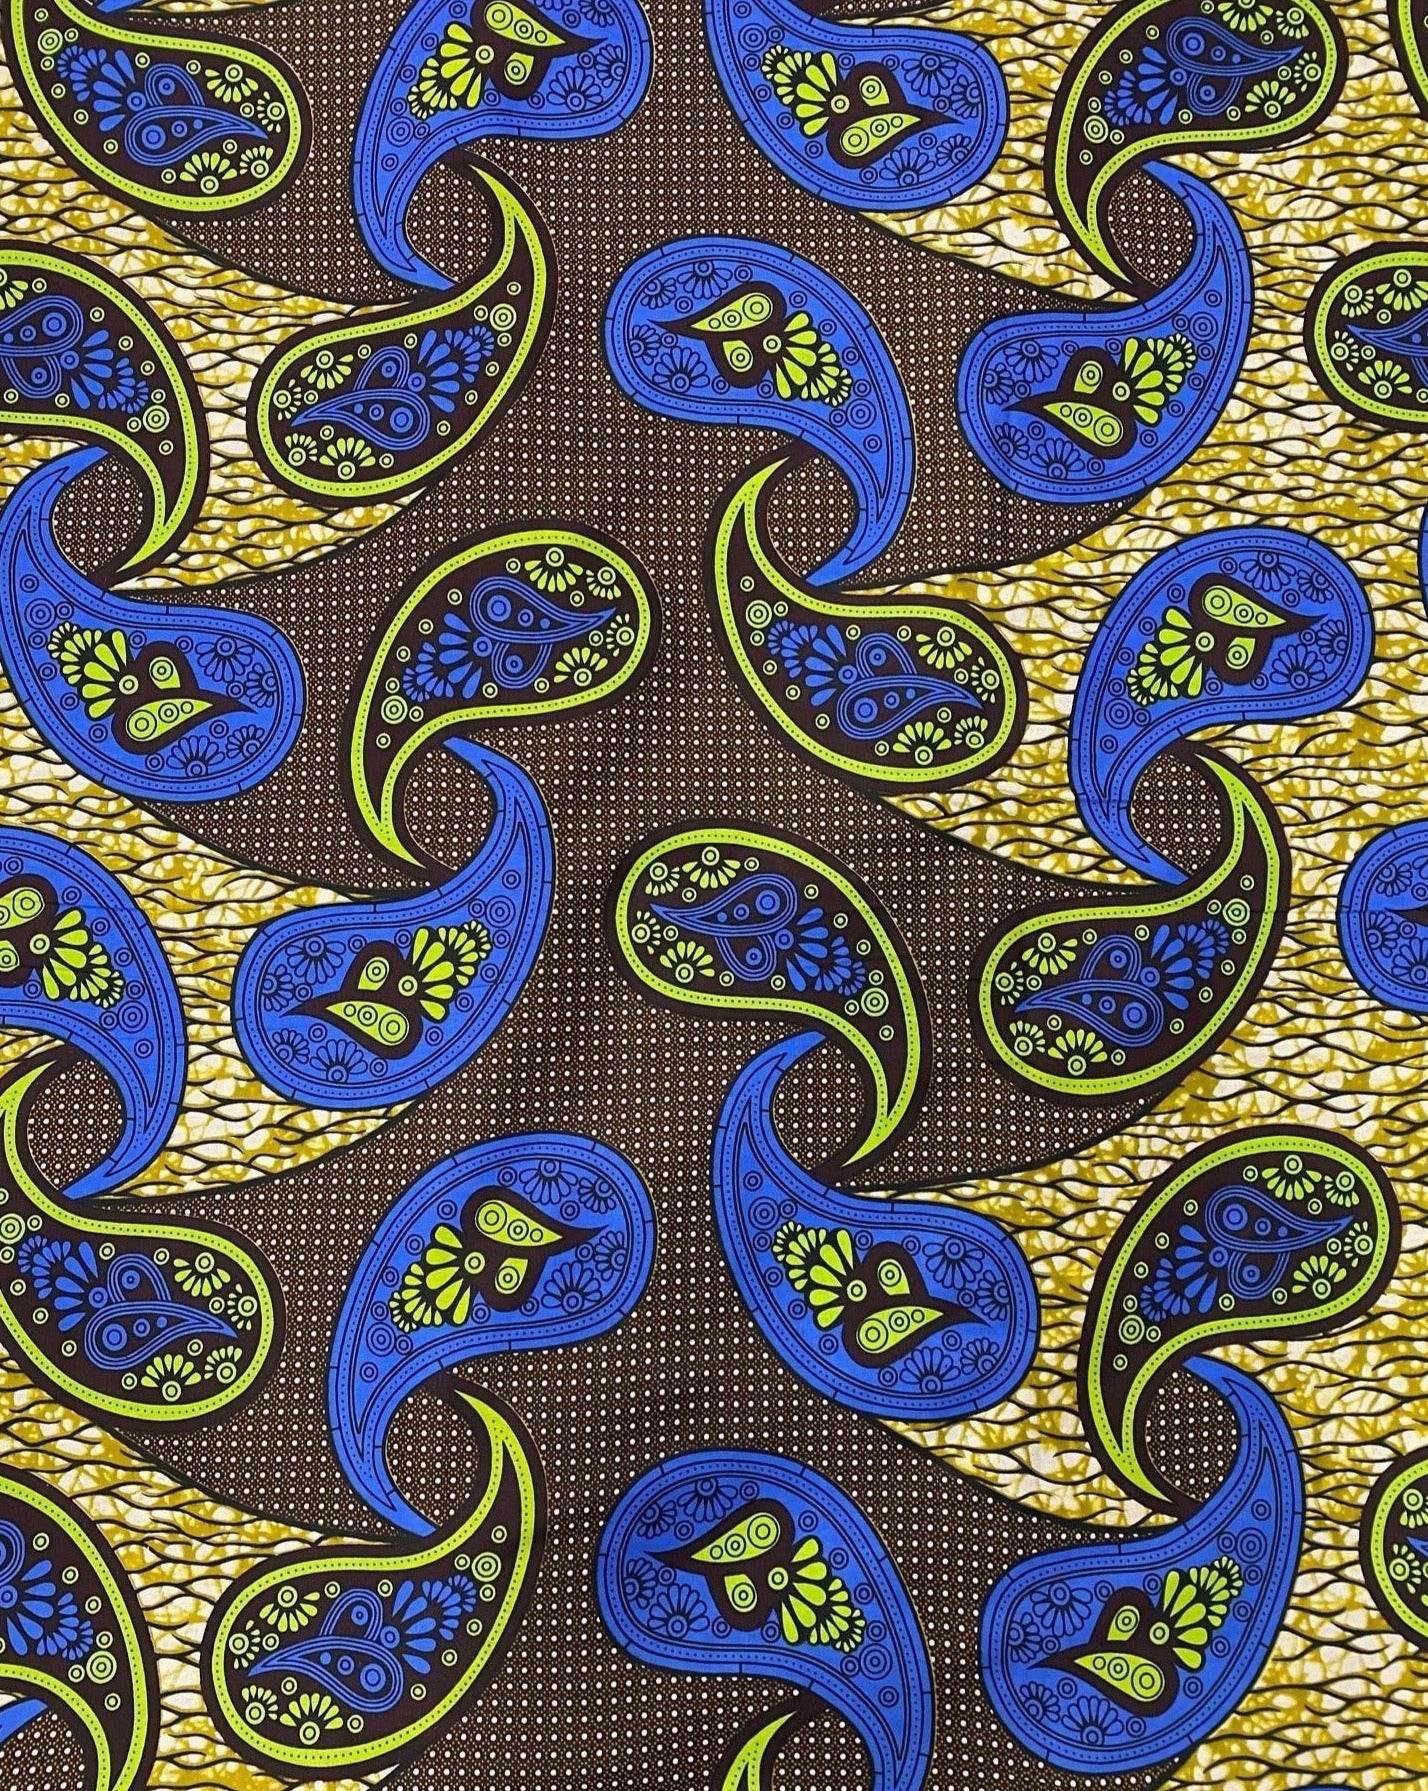 Twirls in Blue Bliss: Exquisite 100% Cotton Fabric, 44" Wide - Artistic & Versatile